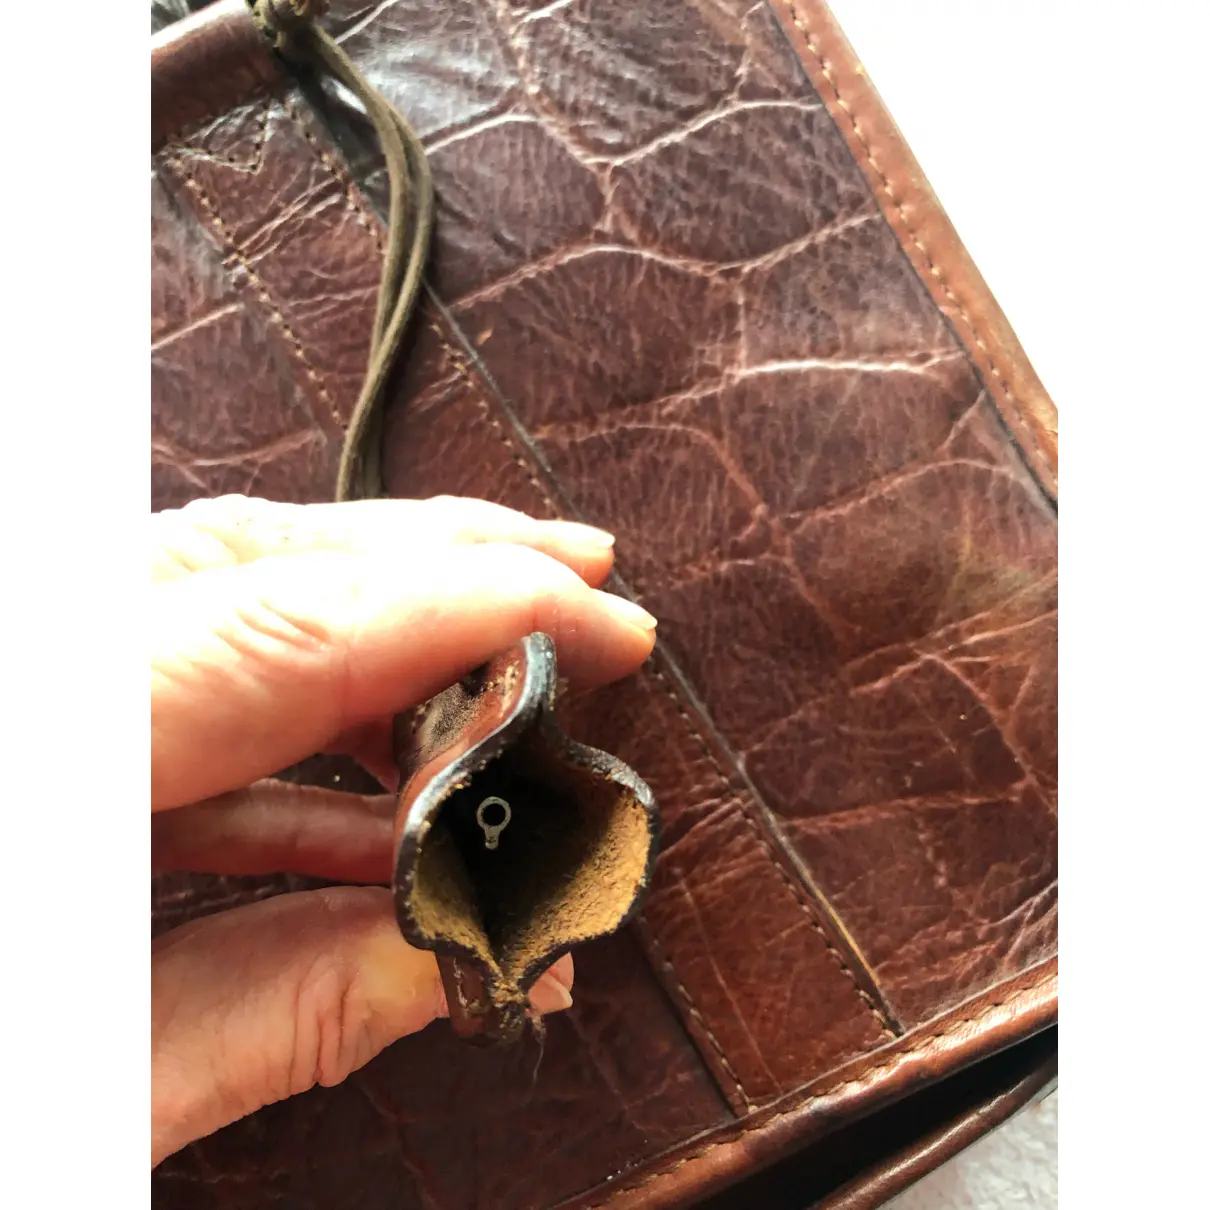 Bayswater leather handbag Mulberry - Vintage